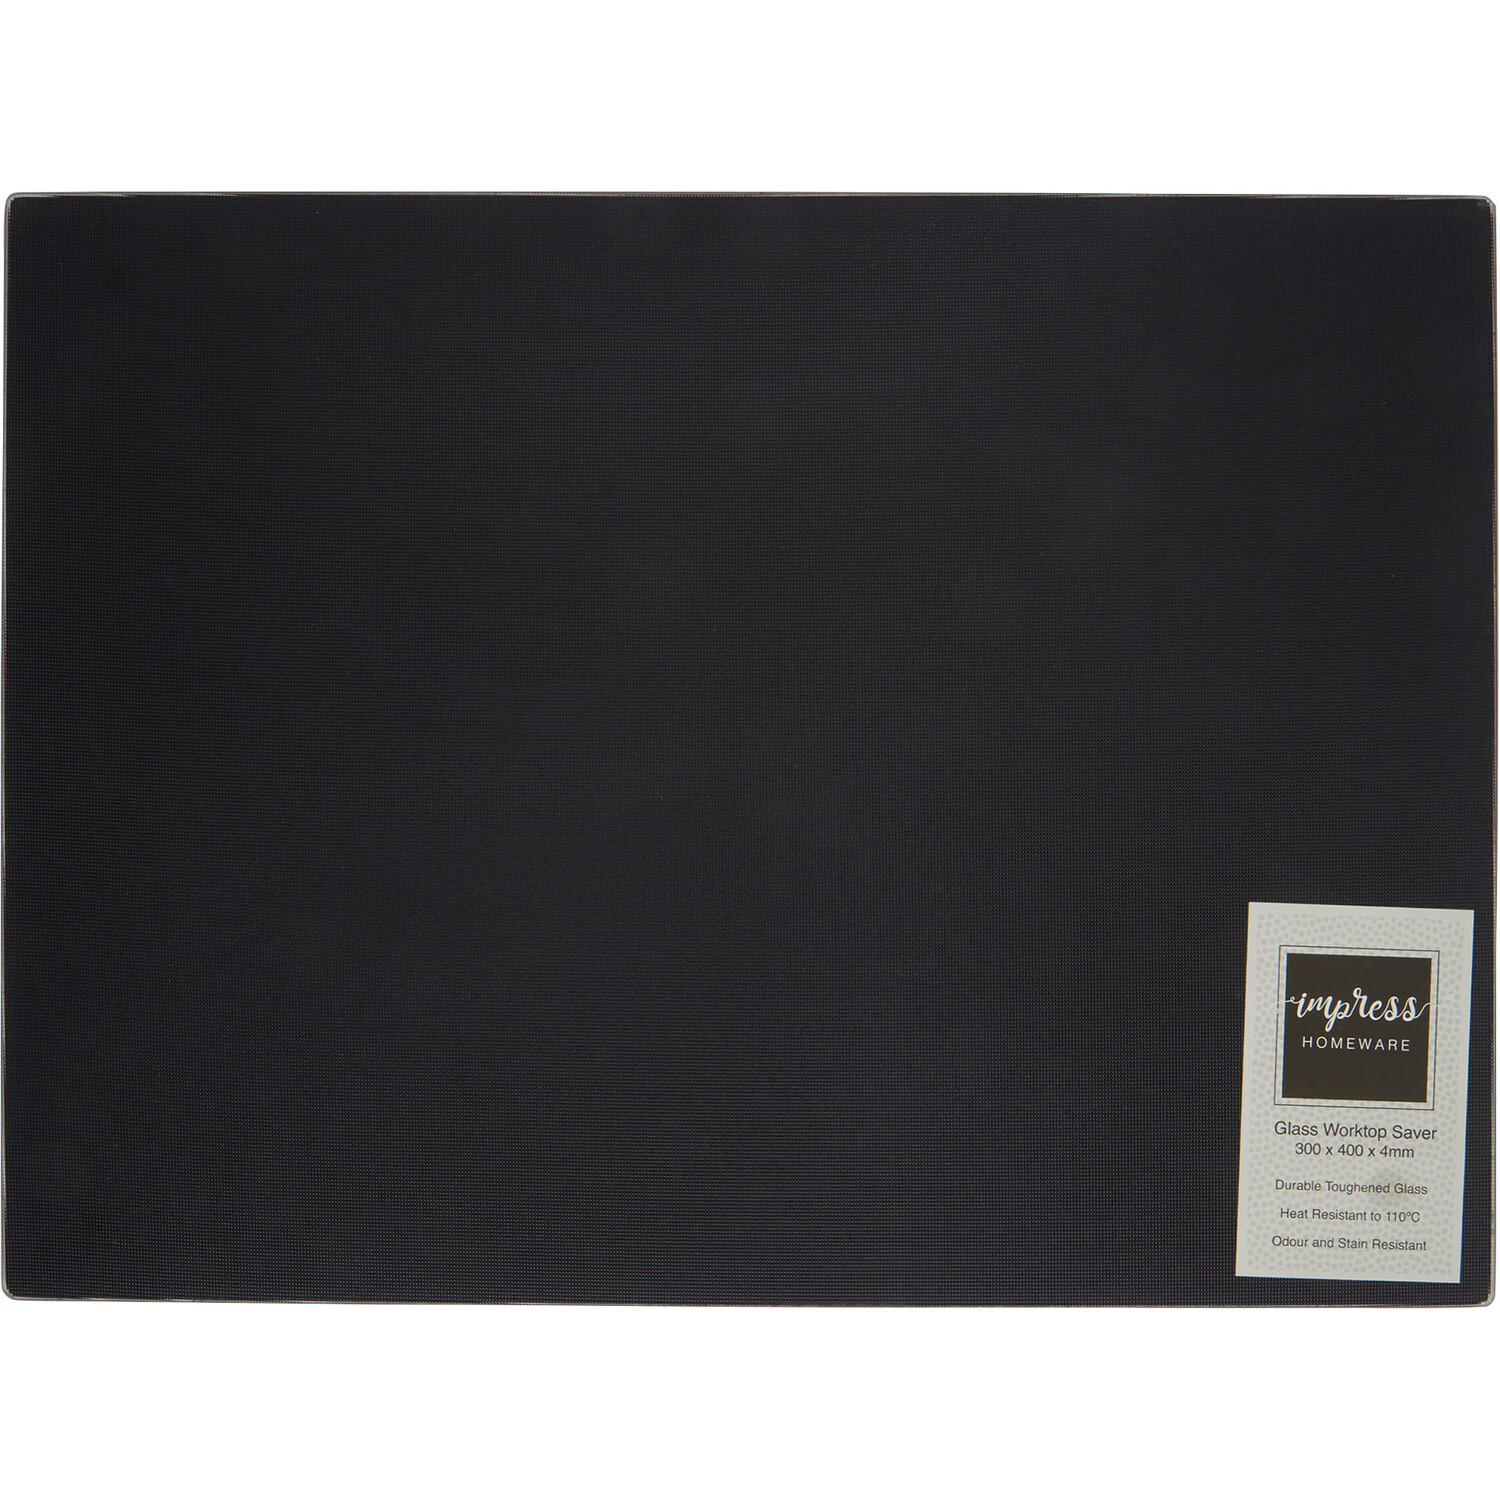 Black Glass Worktop Saver - Black Image 1